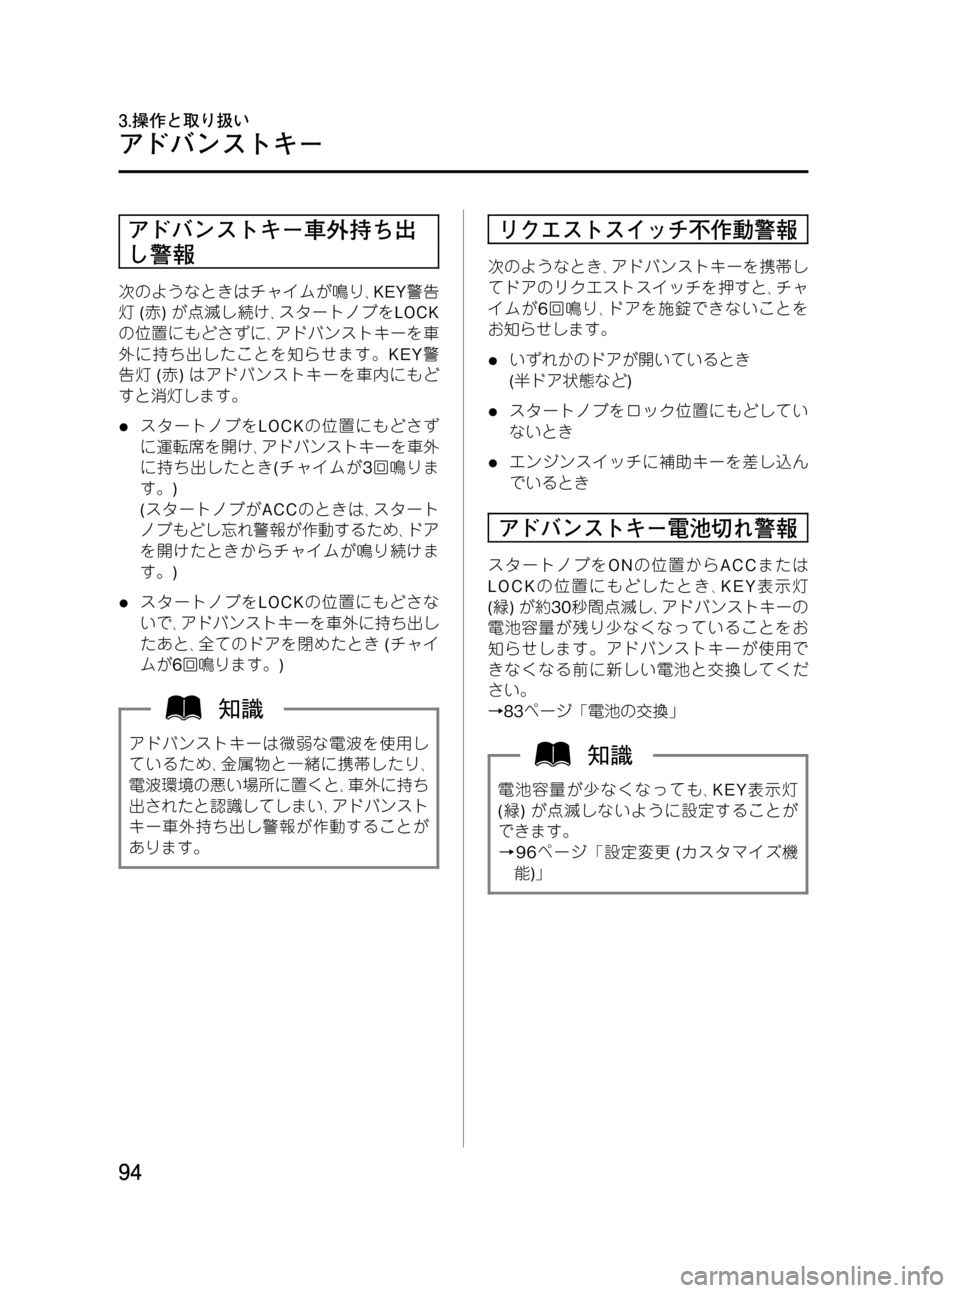 MAZDA MODEL RX 8 2008  取扱説明書 (in Japanese) Black plate (94,1)
アドバンストキー車外持ち出
し警報
次のようなときはチャイムが鳴り､KEY警告
灯(赤)が点滅し続け､スタートノブをLOCK
の位置にもど